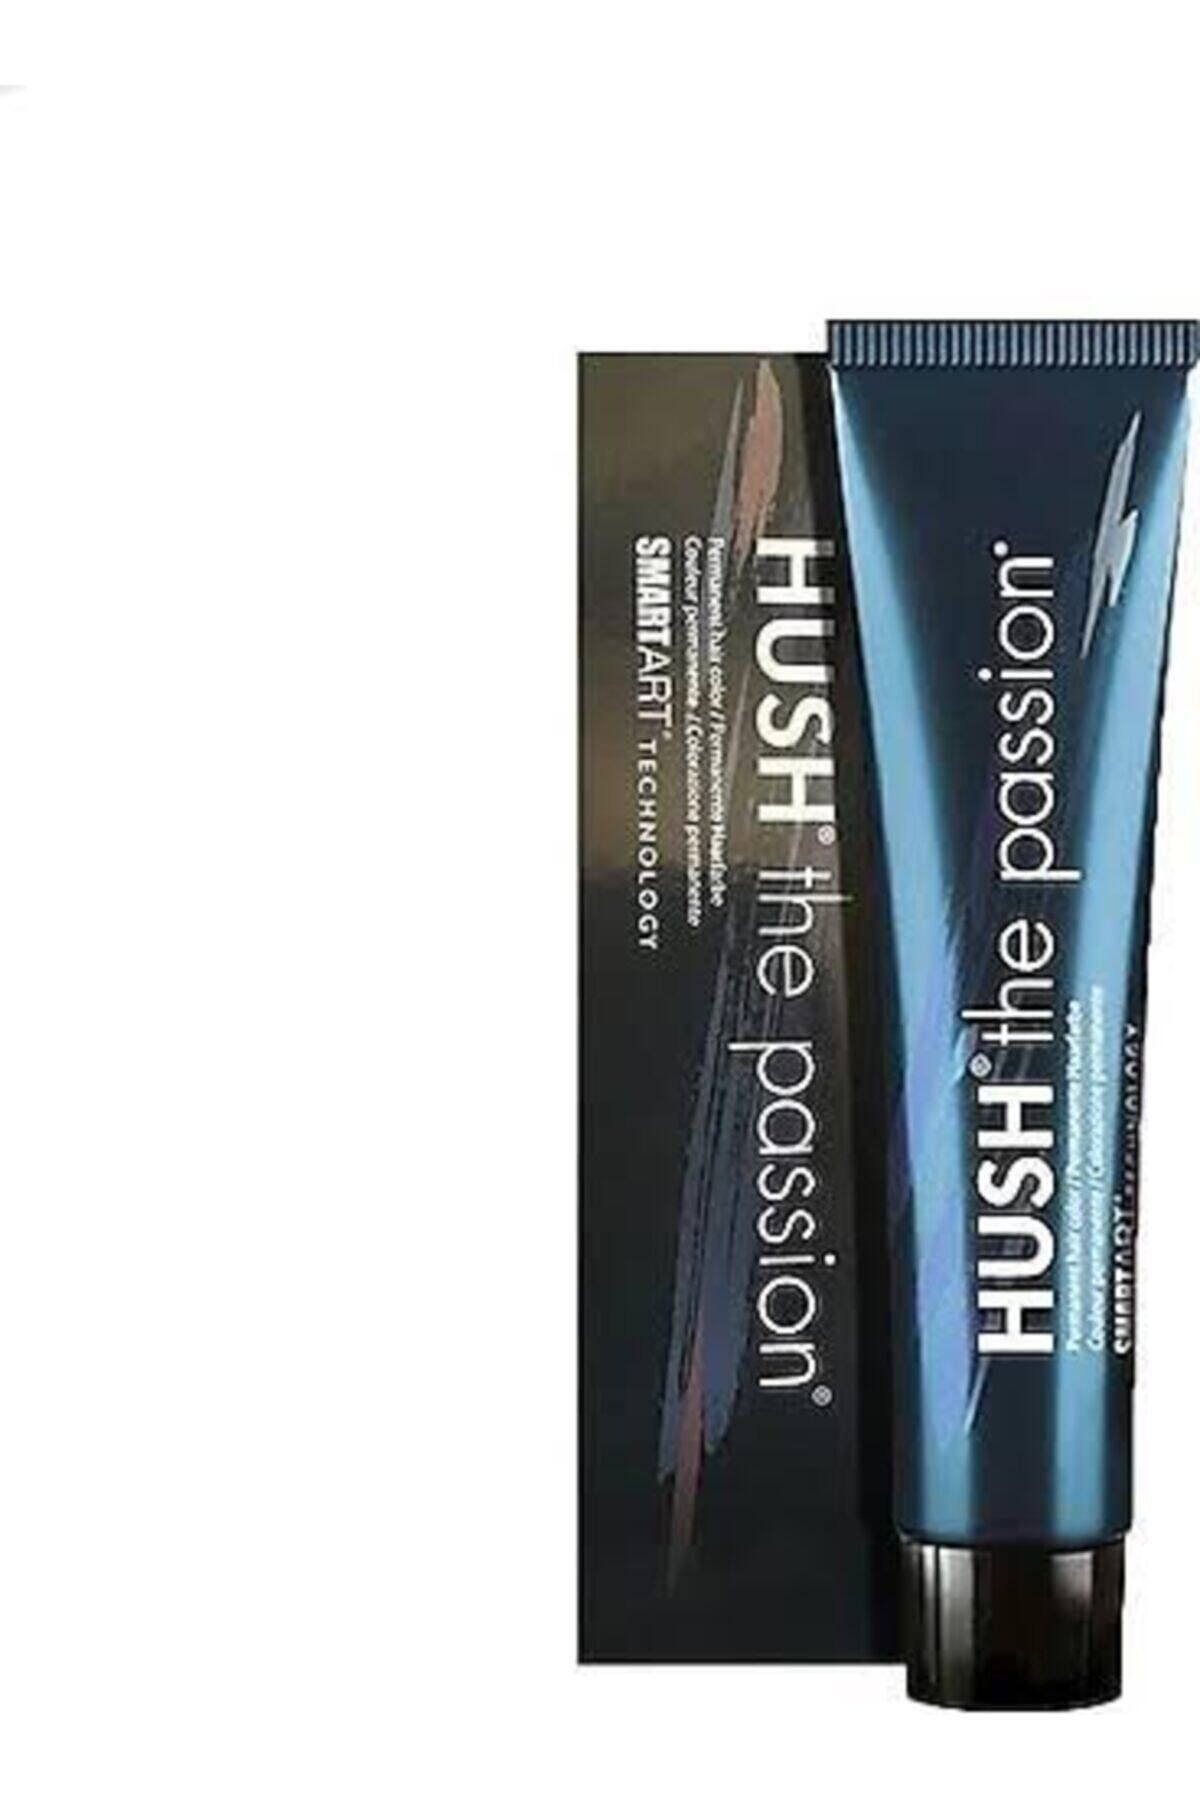 HUSH 8.0 Açik Kumral The Passion Smart Saç Boyası 60 ml